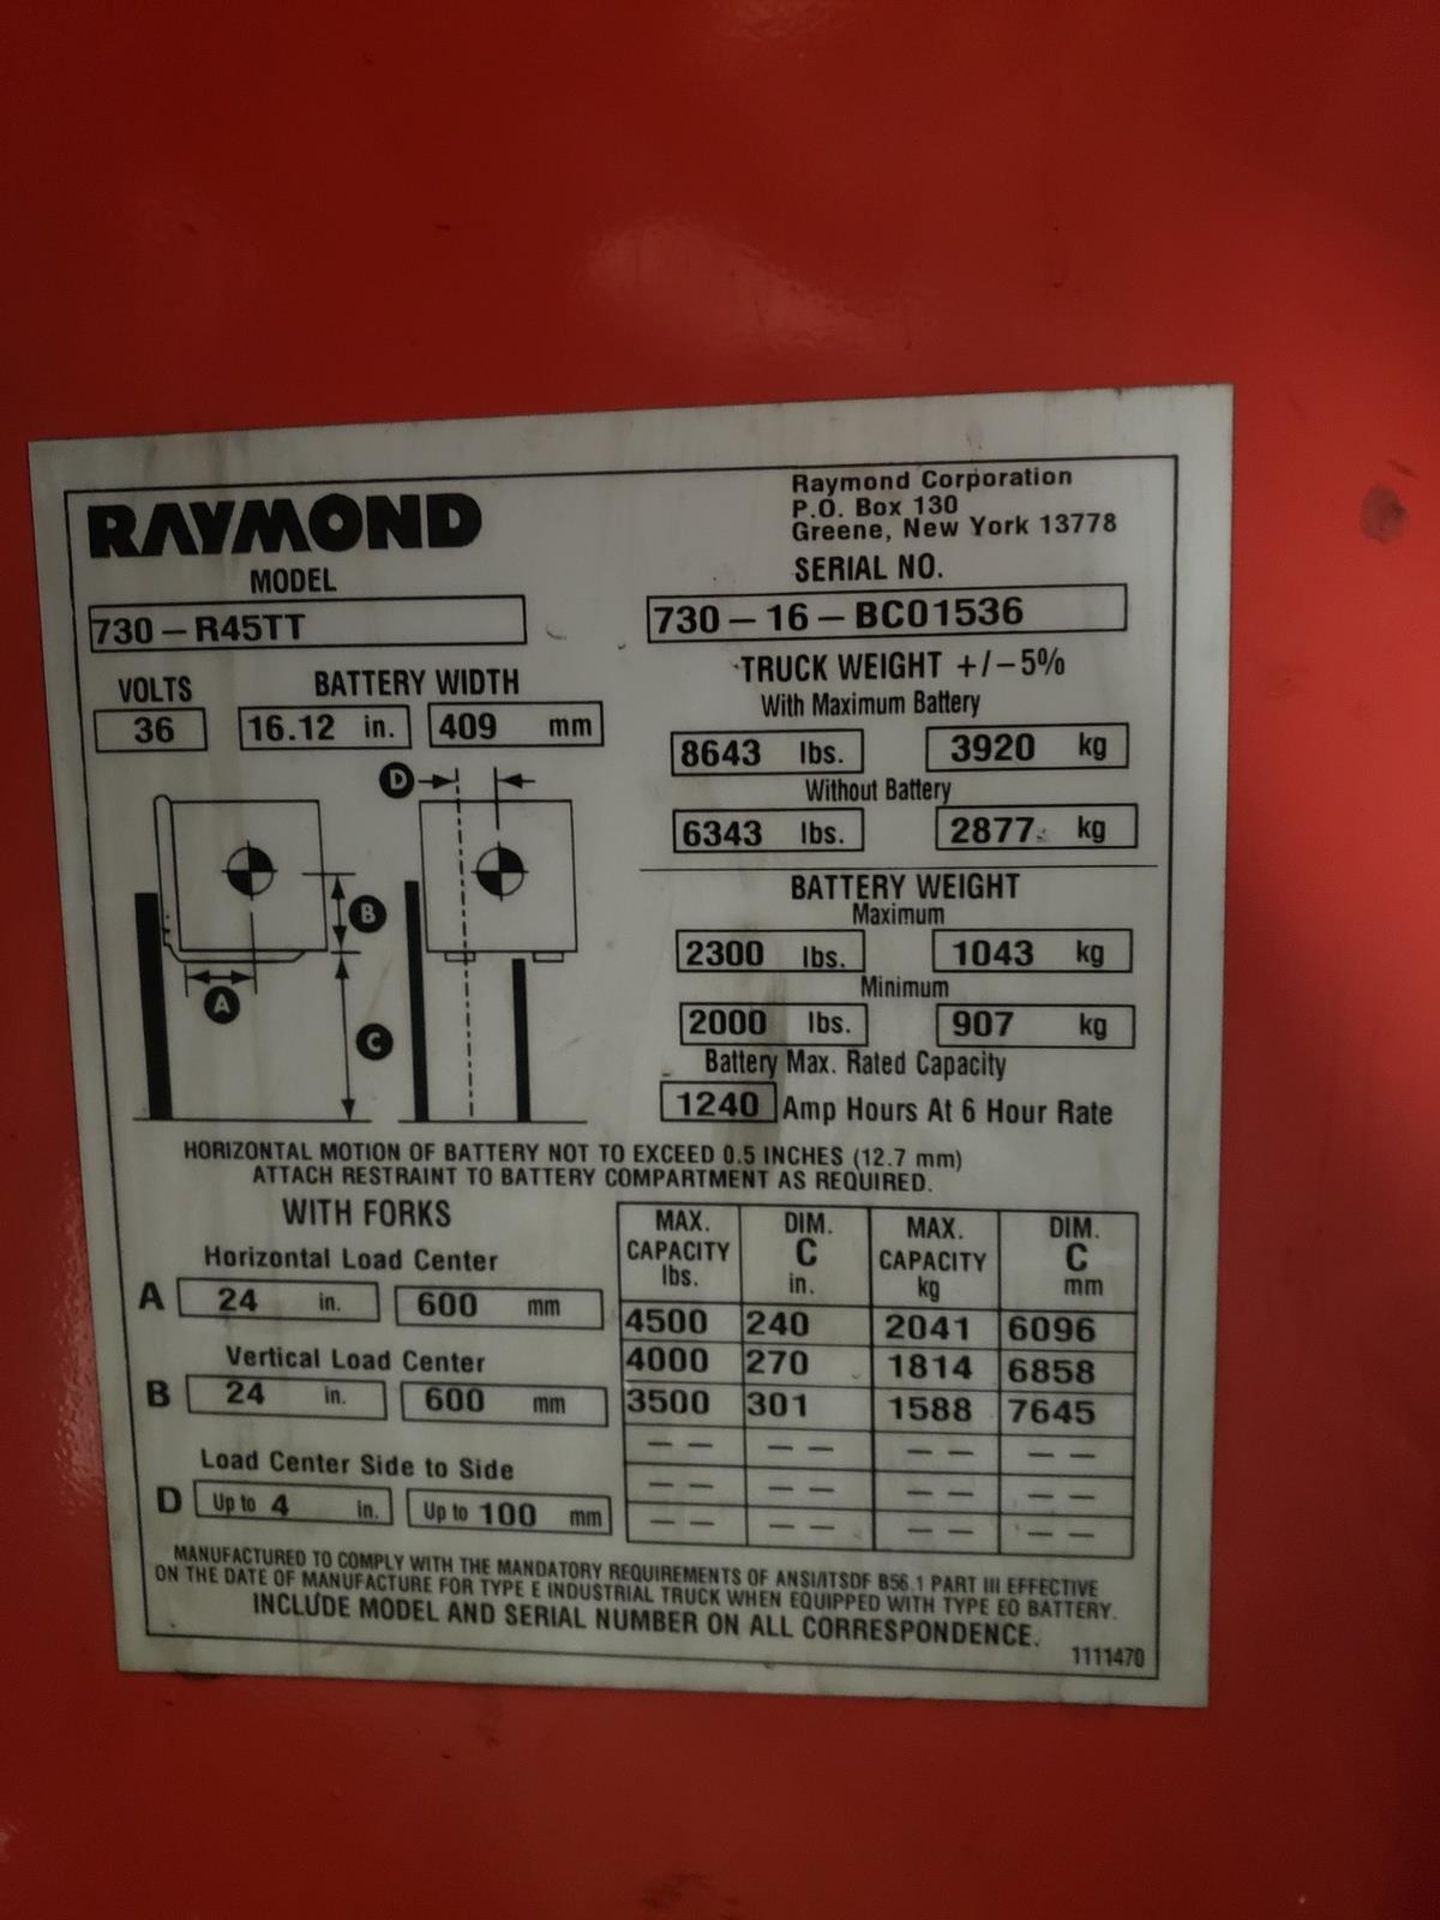 Raymond Electric Standup Forklift, 36 Volt, 4500 Lb Capacity, M# 730-R45TT, S/N 730 | Rig Fee $100 - Image 2 of 5